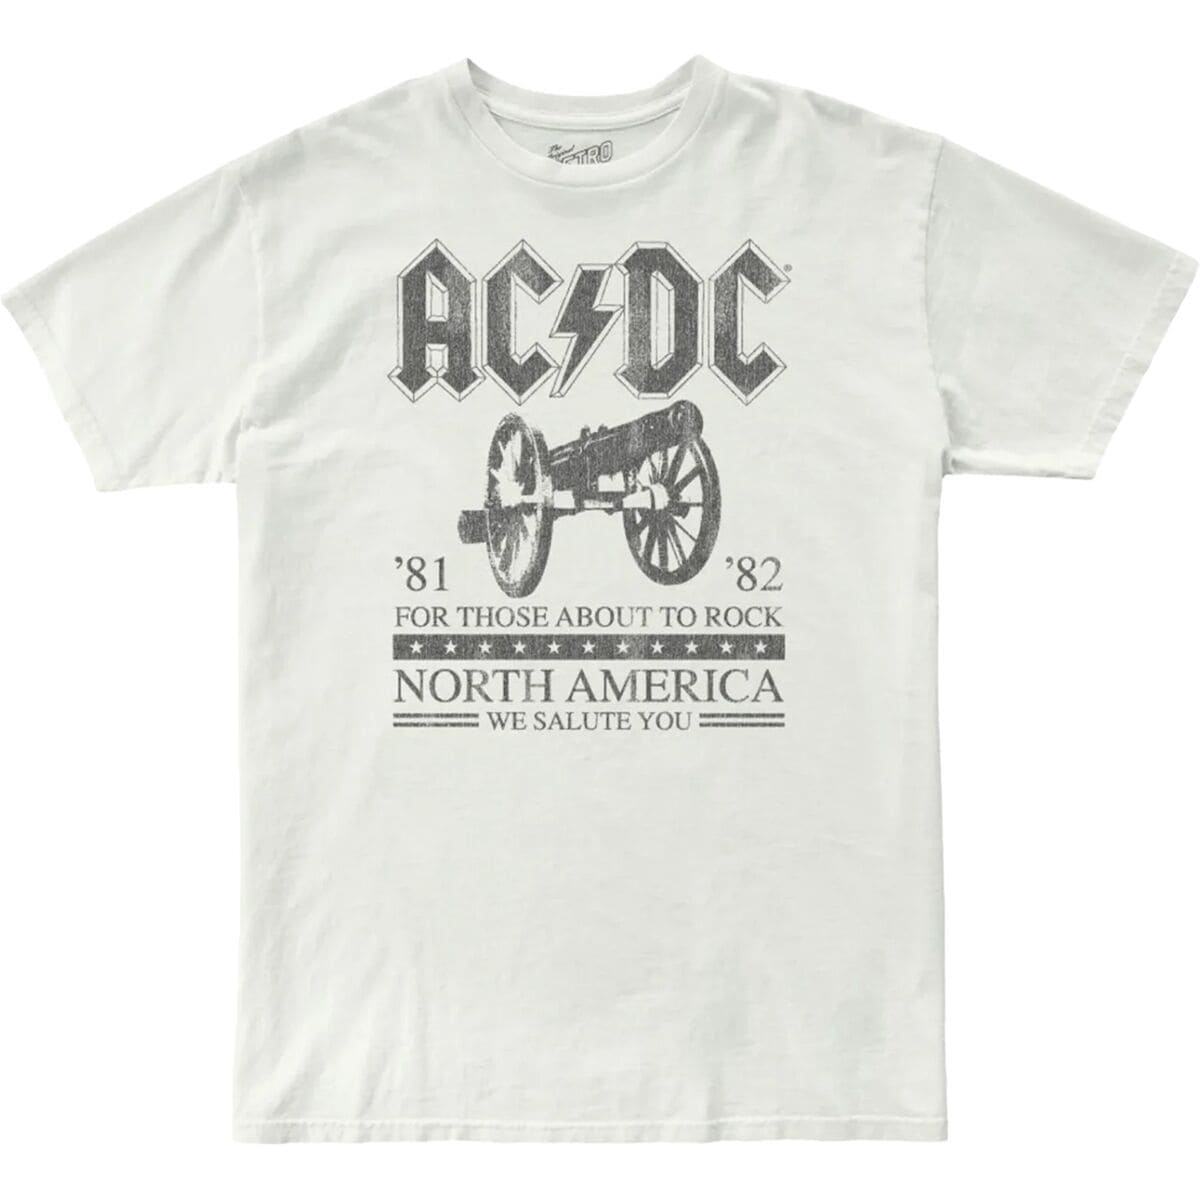 Унисекс Хлопковая Футболка Acdc About To Rock North America от Original Retro Brand Original Retro Brand